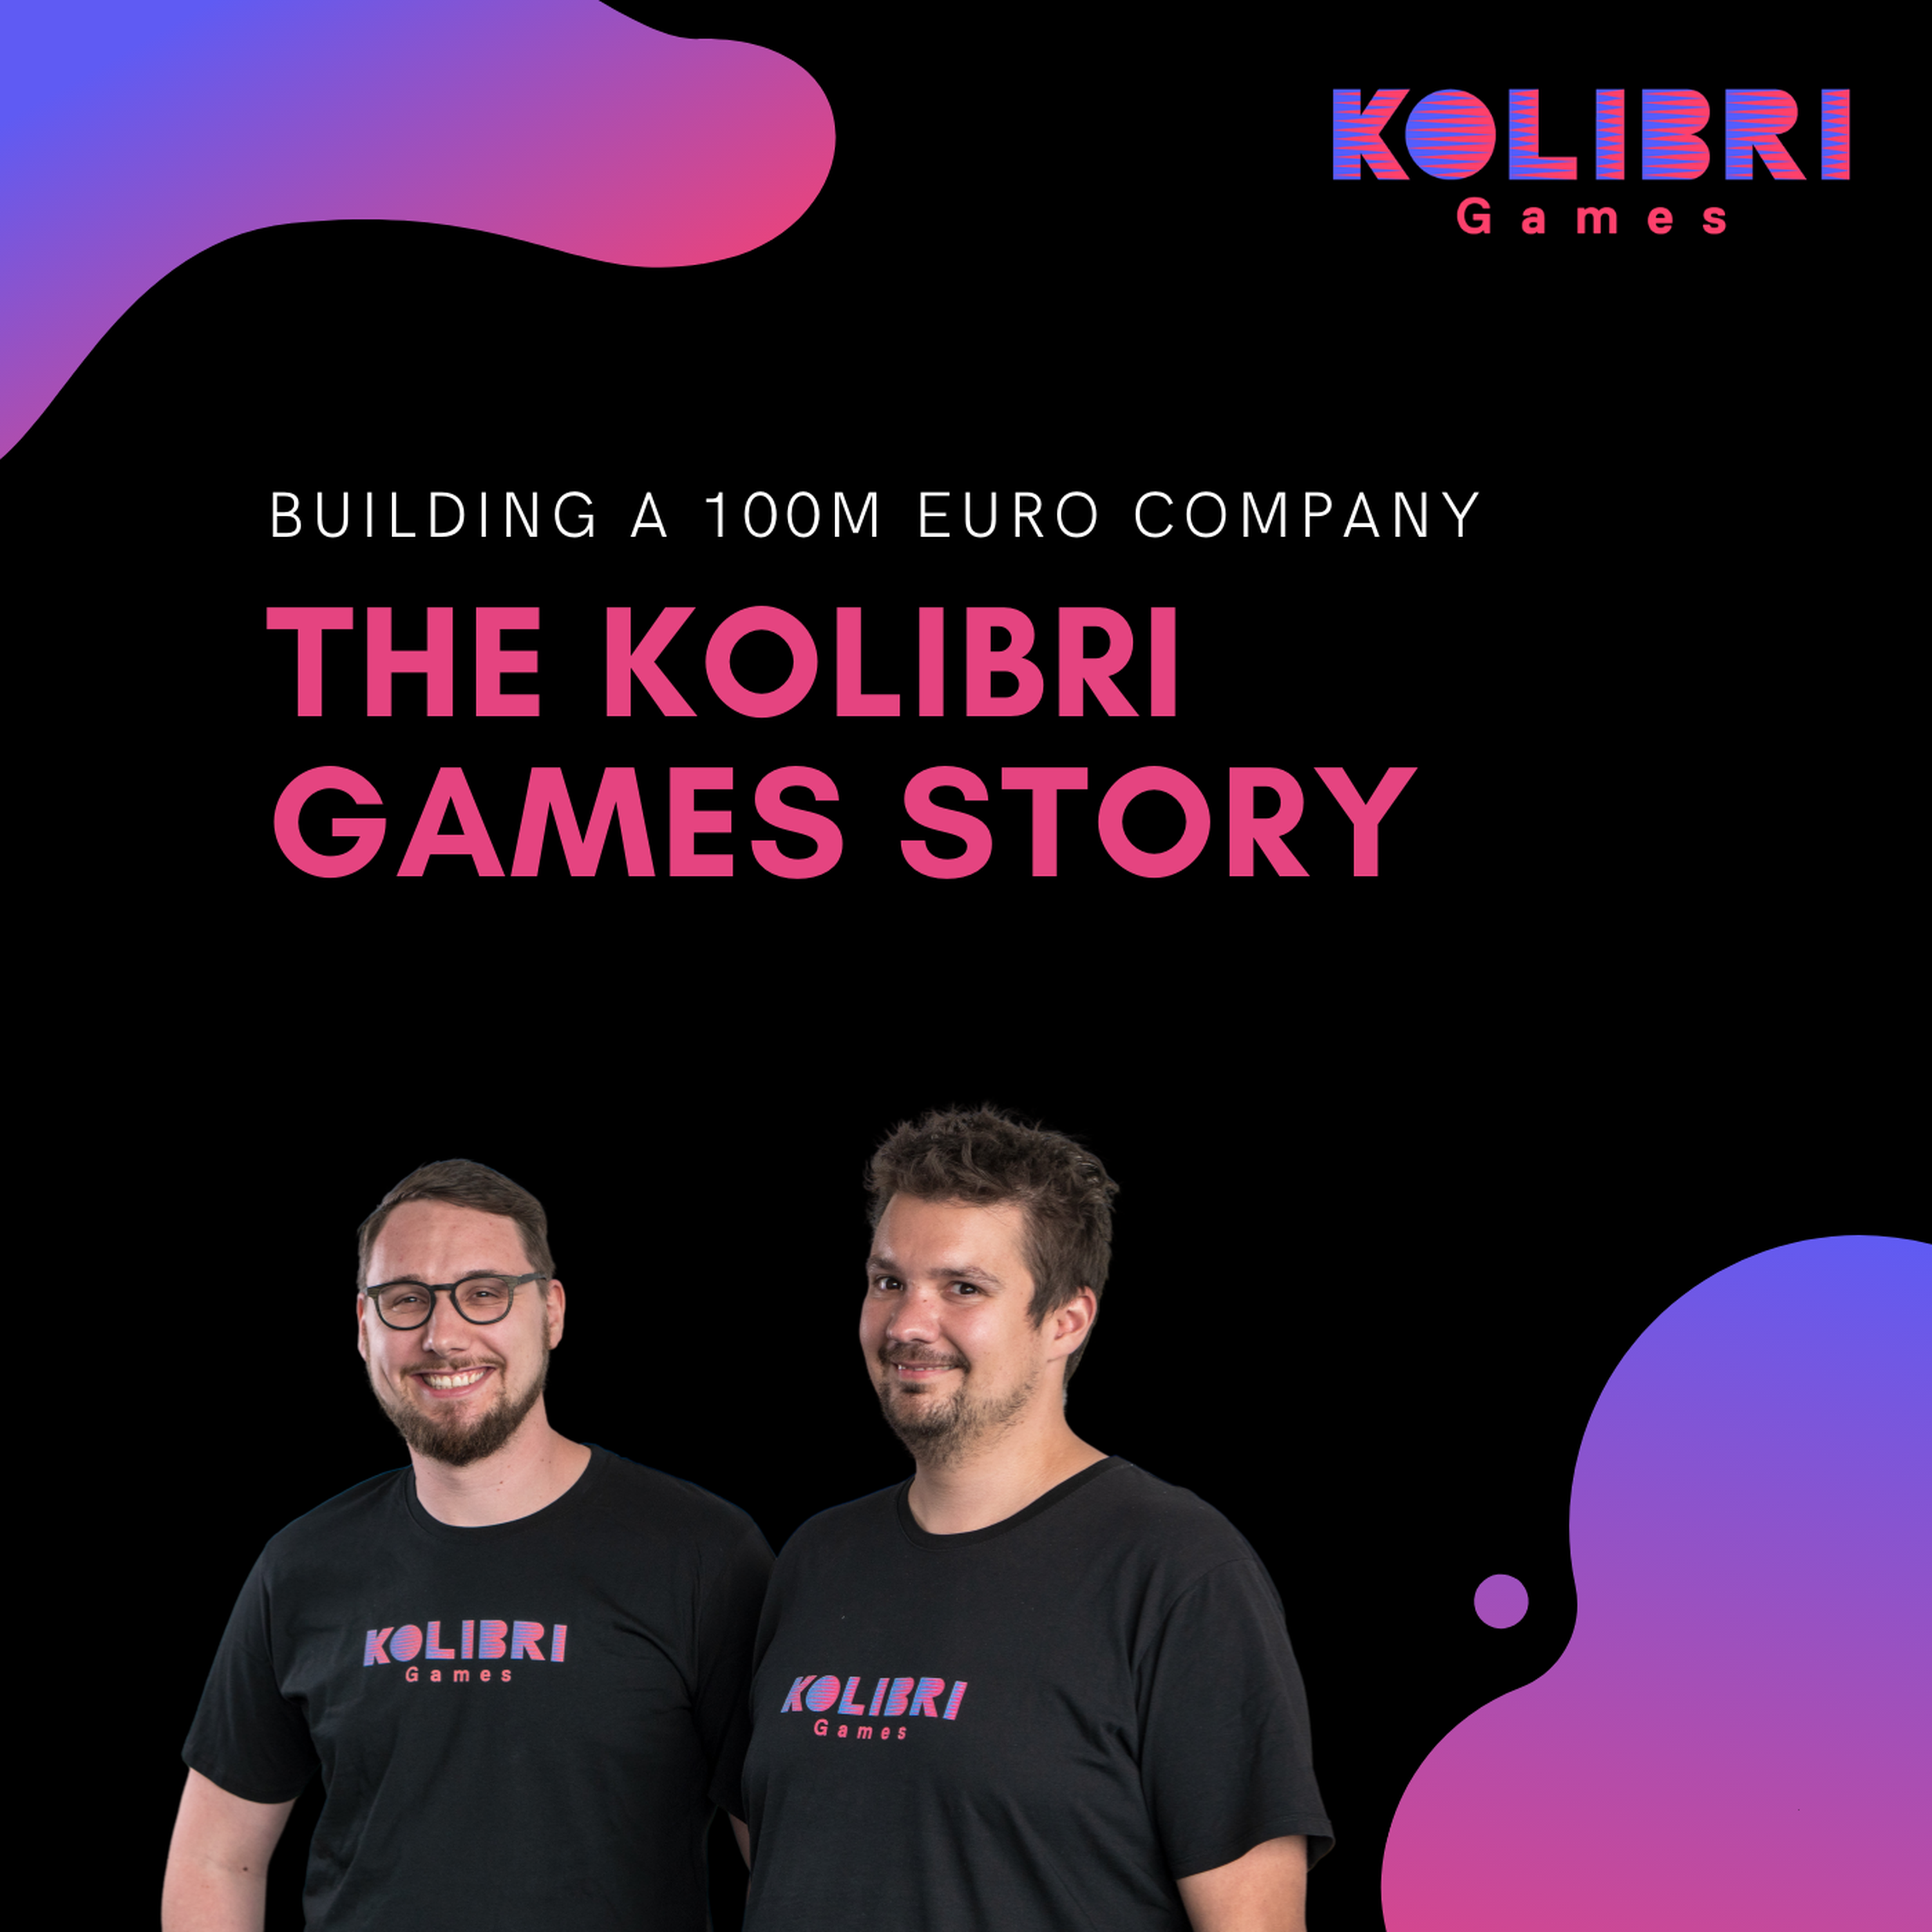 Die Kolibri Games Story (Teil 2) - Daniel Stammler, Janosch Sadowski | Gründerstories Image